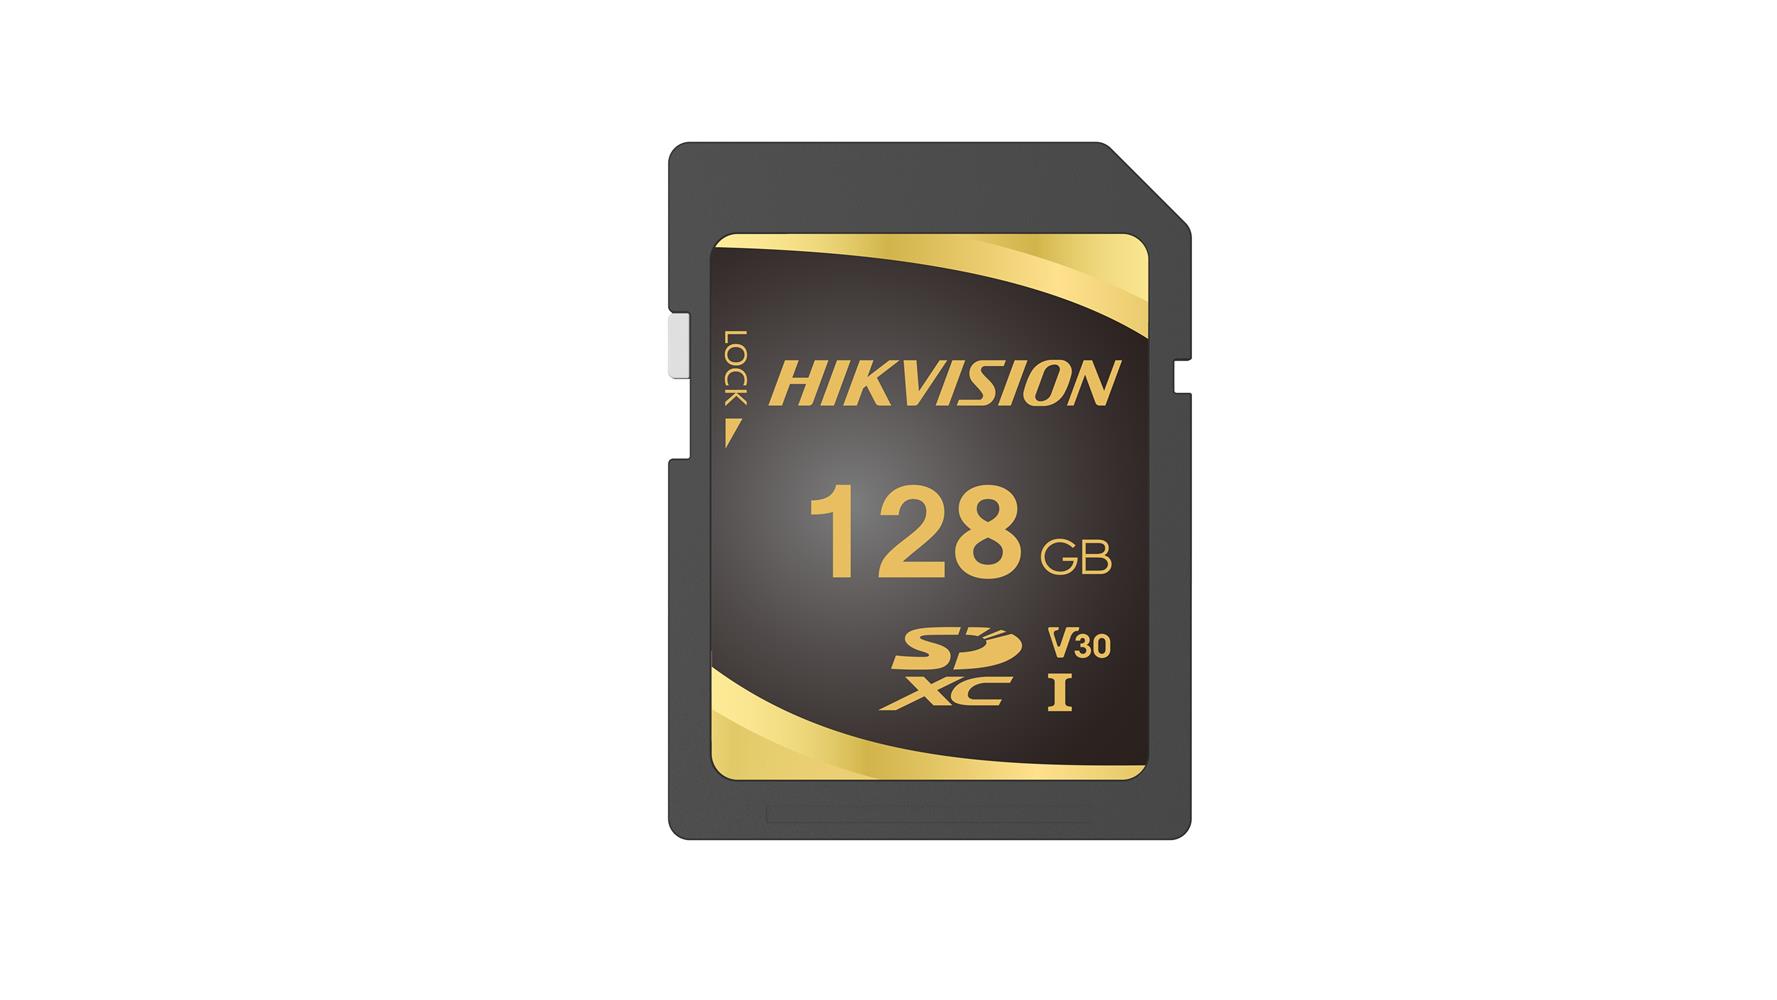 HIKVISION HS-SD-P10-128G 128GB SDXC CLASS10 U3 V30 95-85MBS ETLC 7-24 CCTV HAFIZA KARTI